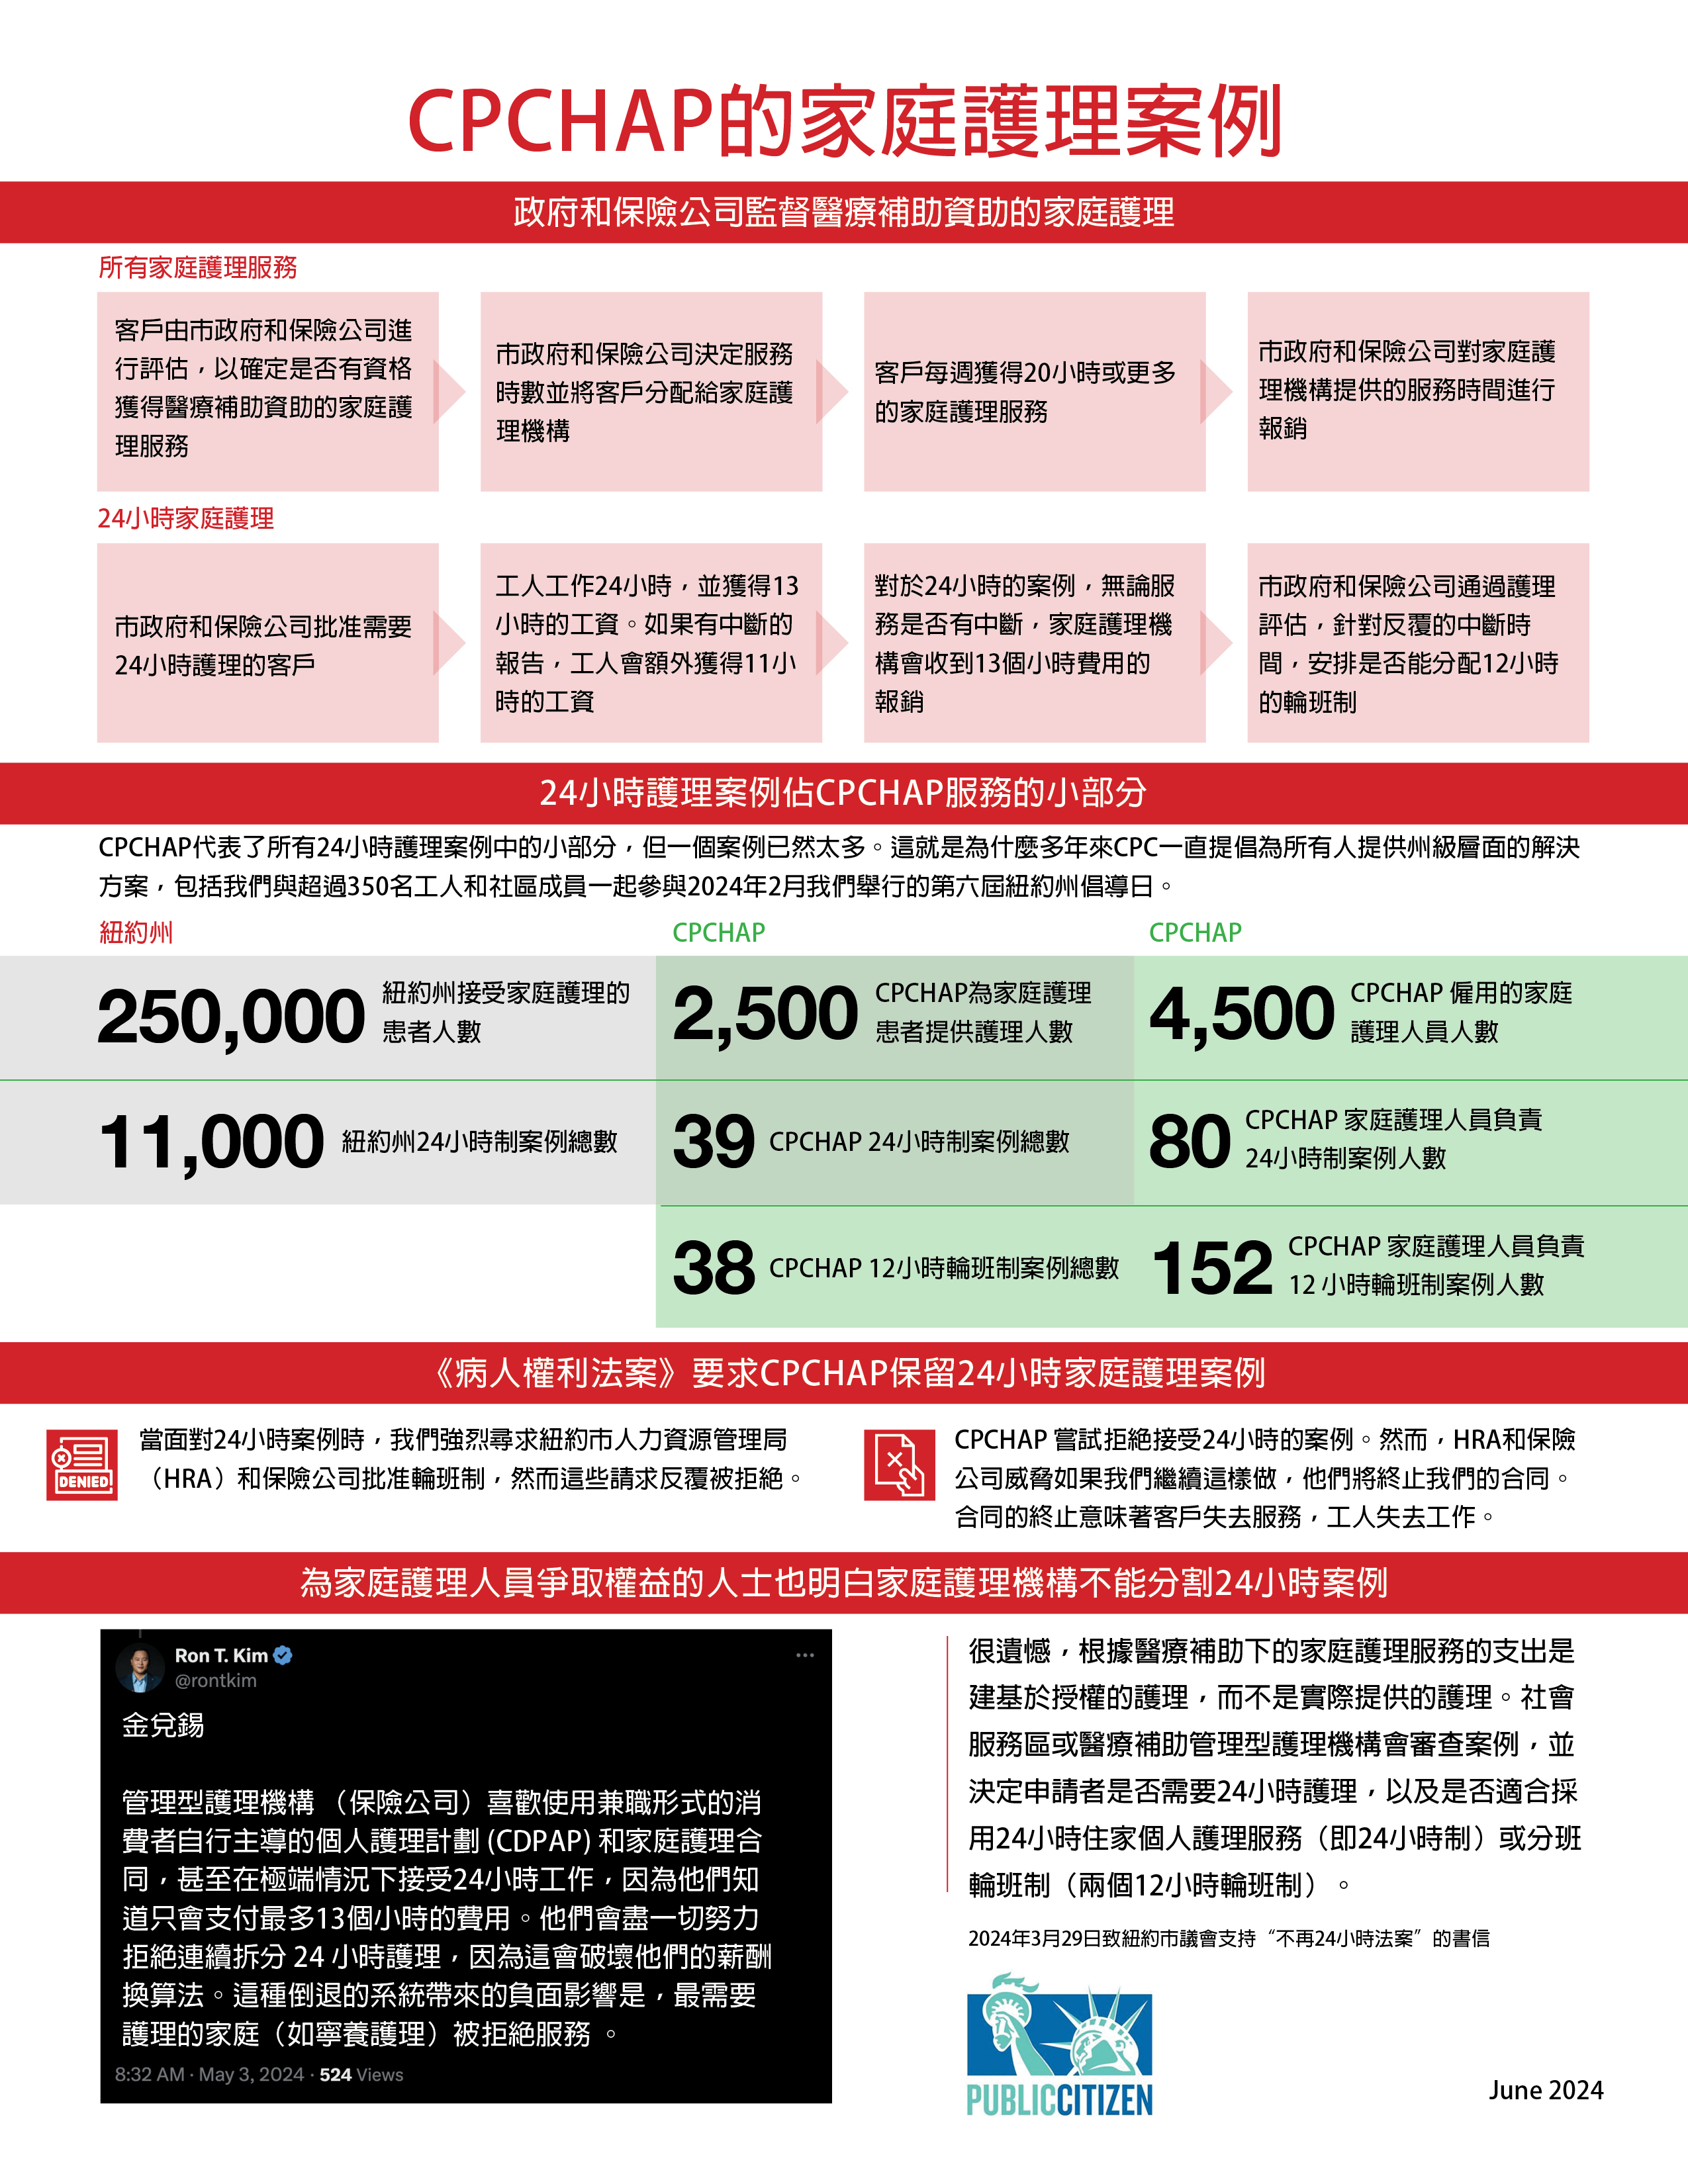 CPCHAP Infographic CHINESE JUNE 2024 2